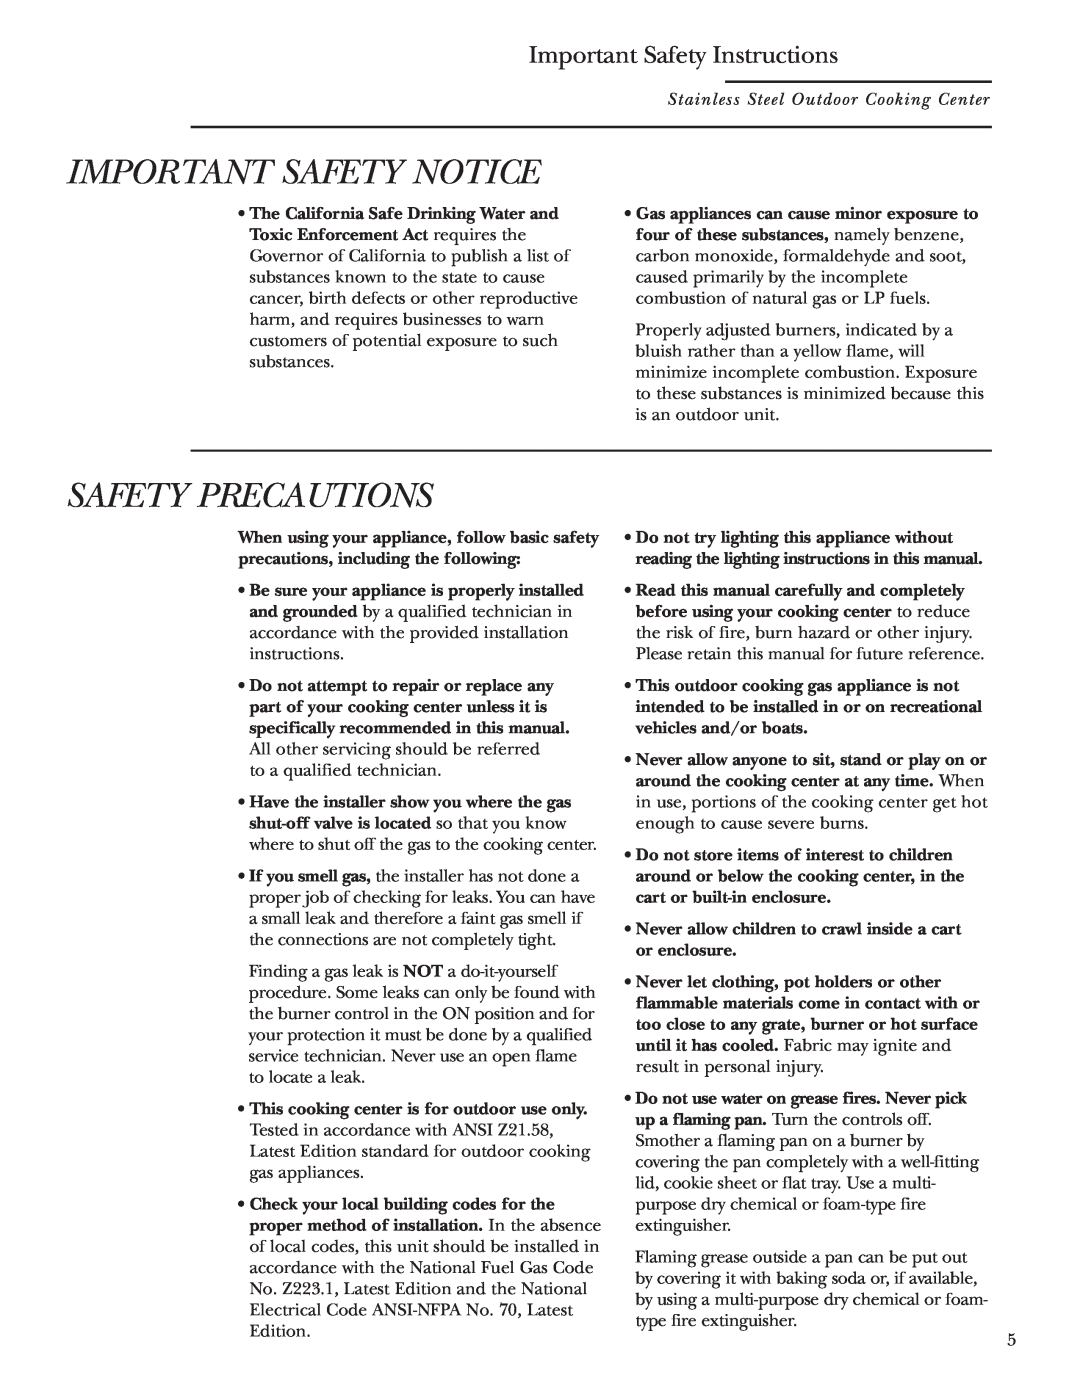 GE ZGG36N20, ZGG48N31, ZGG48N30, ZGG48L30 Important Safety Notice, Safety Precautions, Important Safety Instructions 